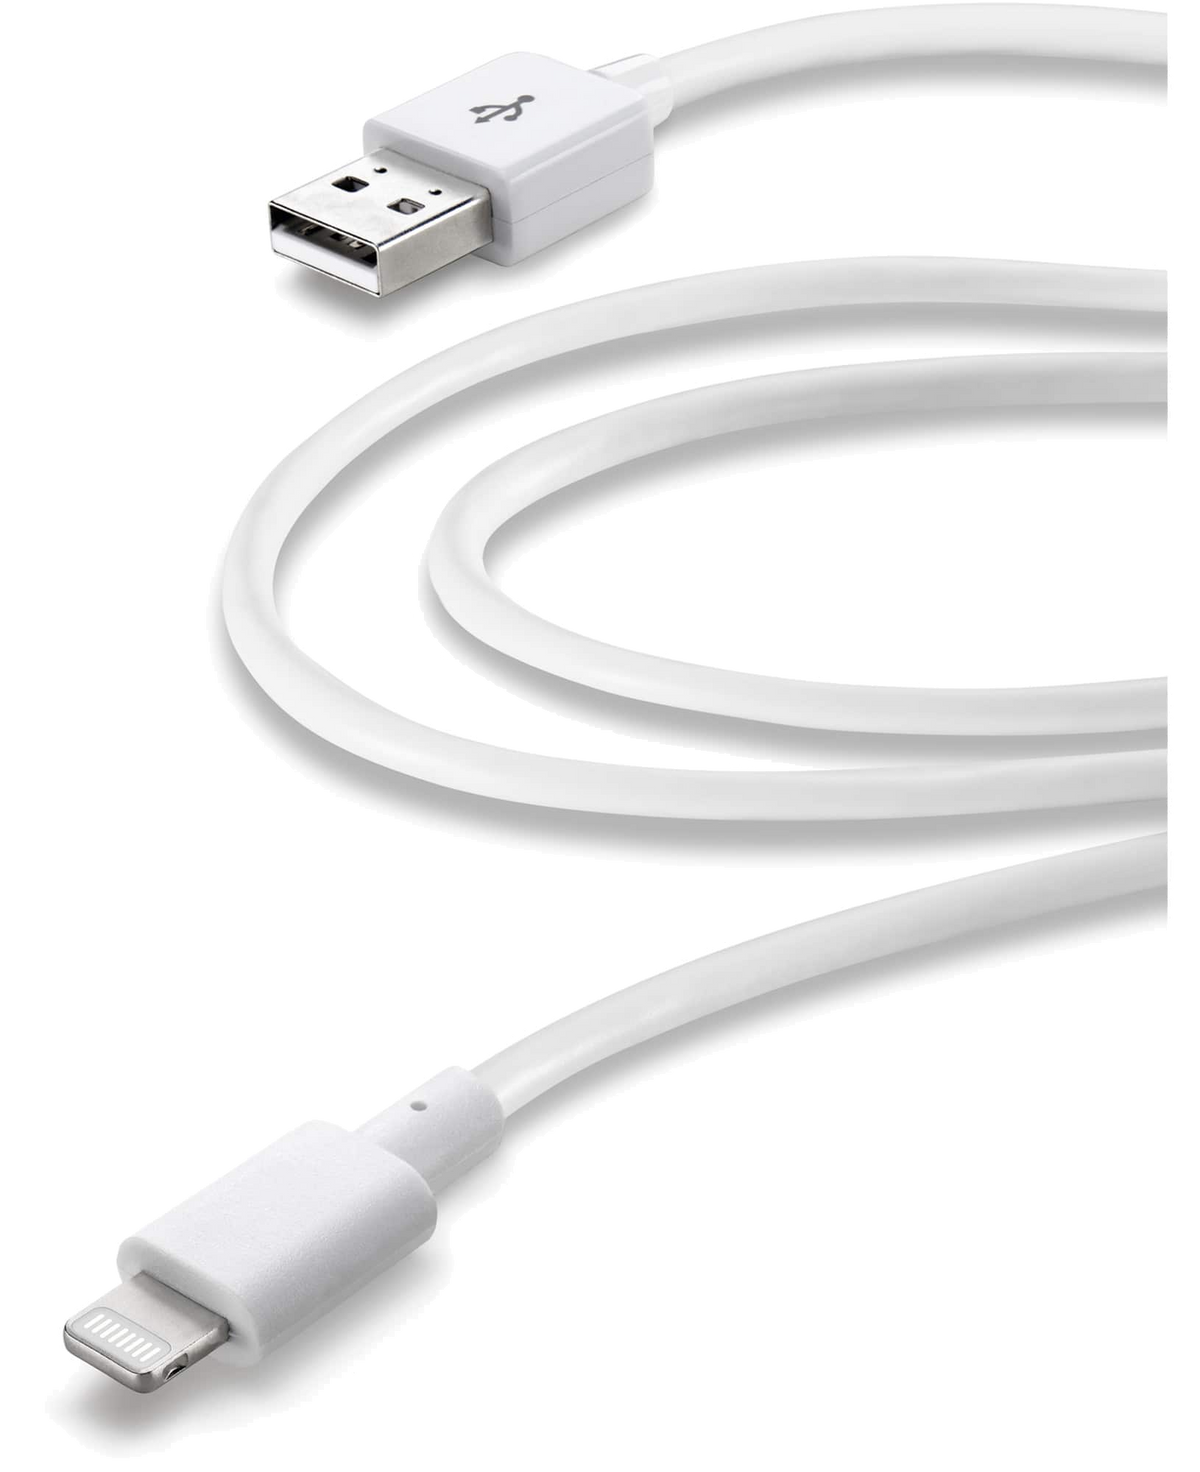 USB 2 2.0-LIGHTNING-ANSCHLUSS, DATENKABEL 2M LINE Datenkabel, Weiß 35855 m, CELLULAR